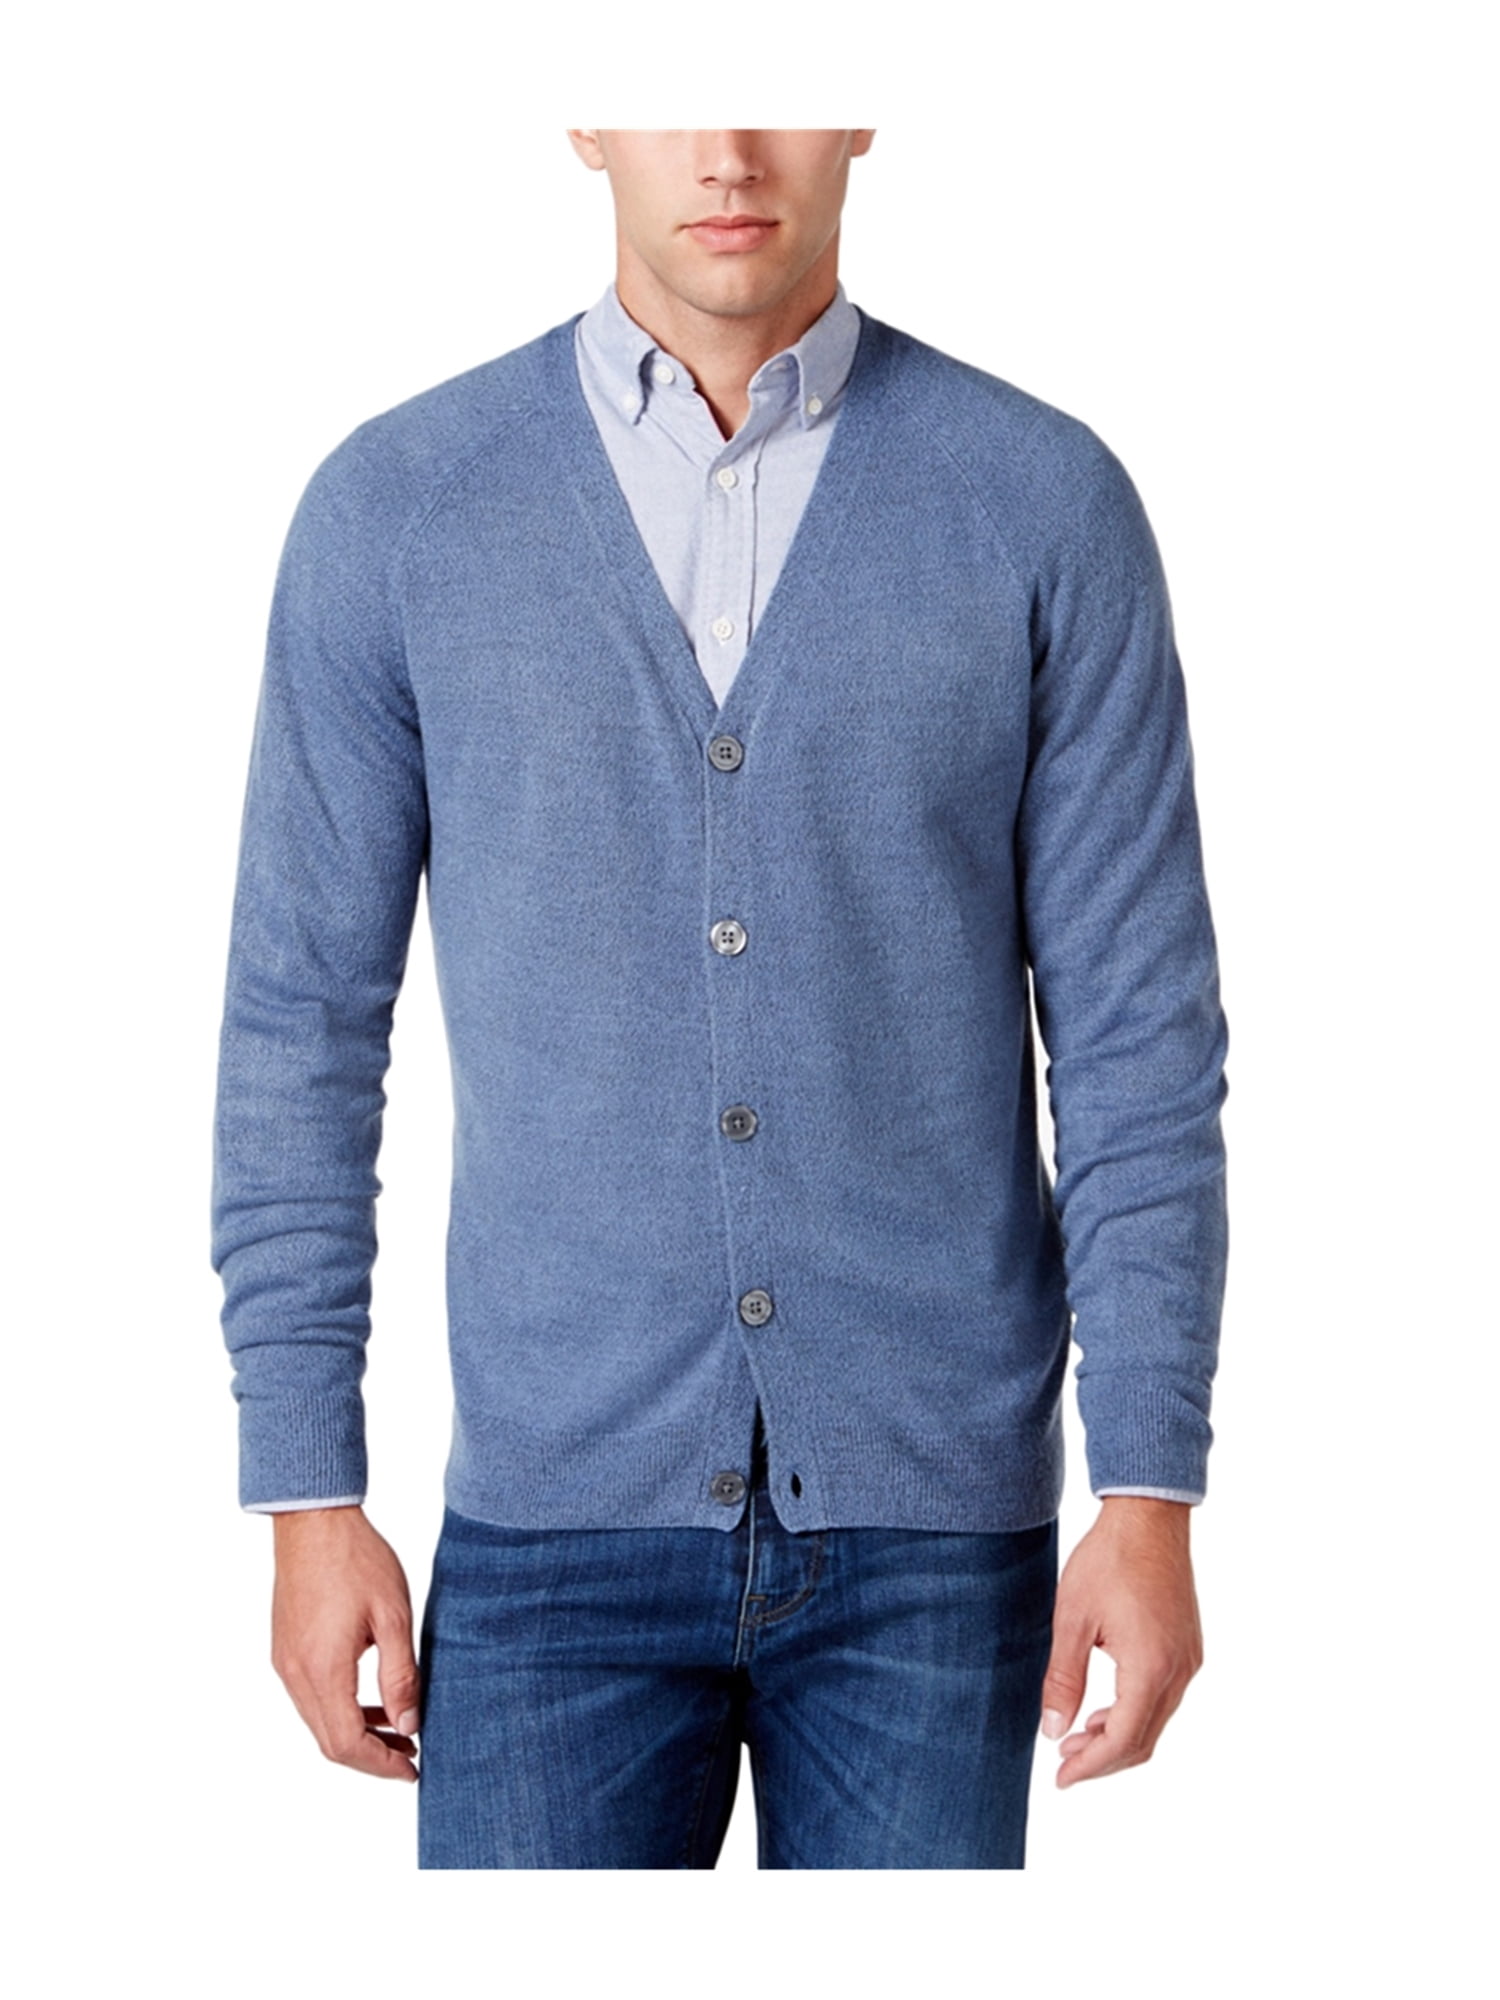 Weatherproof Mens Vintage Cardigan Sweater denimmarl S | Walmart Canada